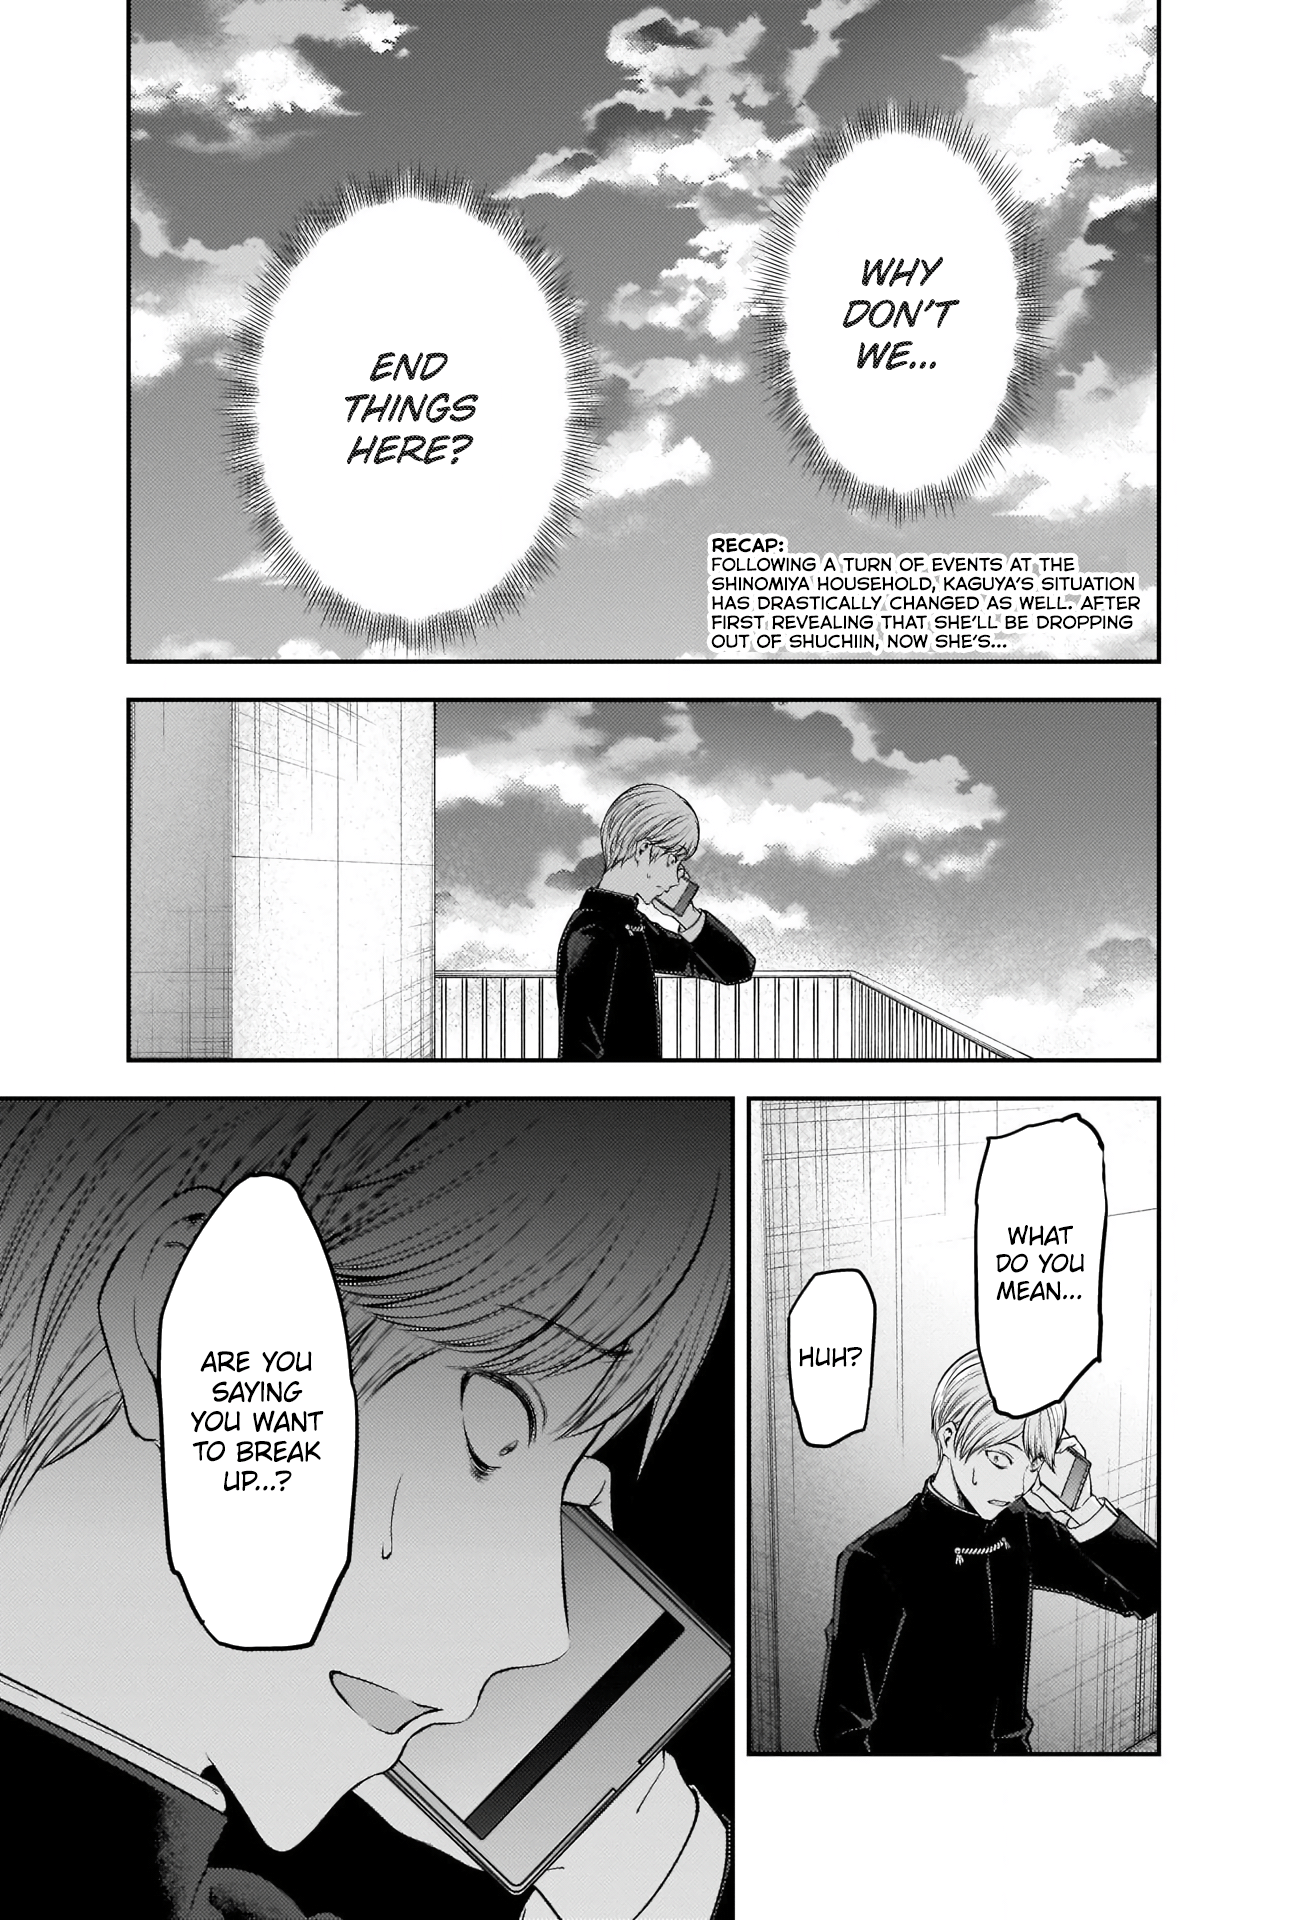 Kaguya-sama: Love is War manga ending in Volume 28 with final chapter 281